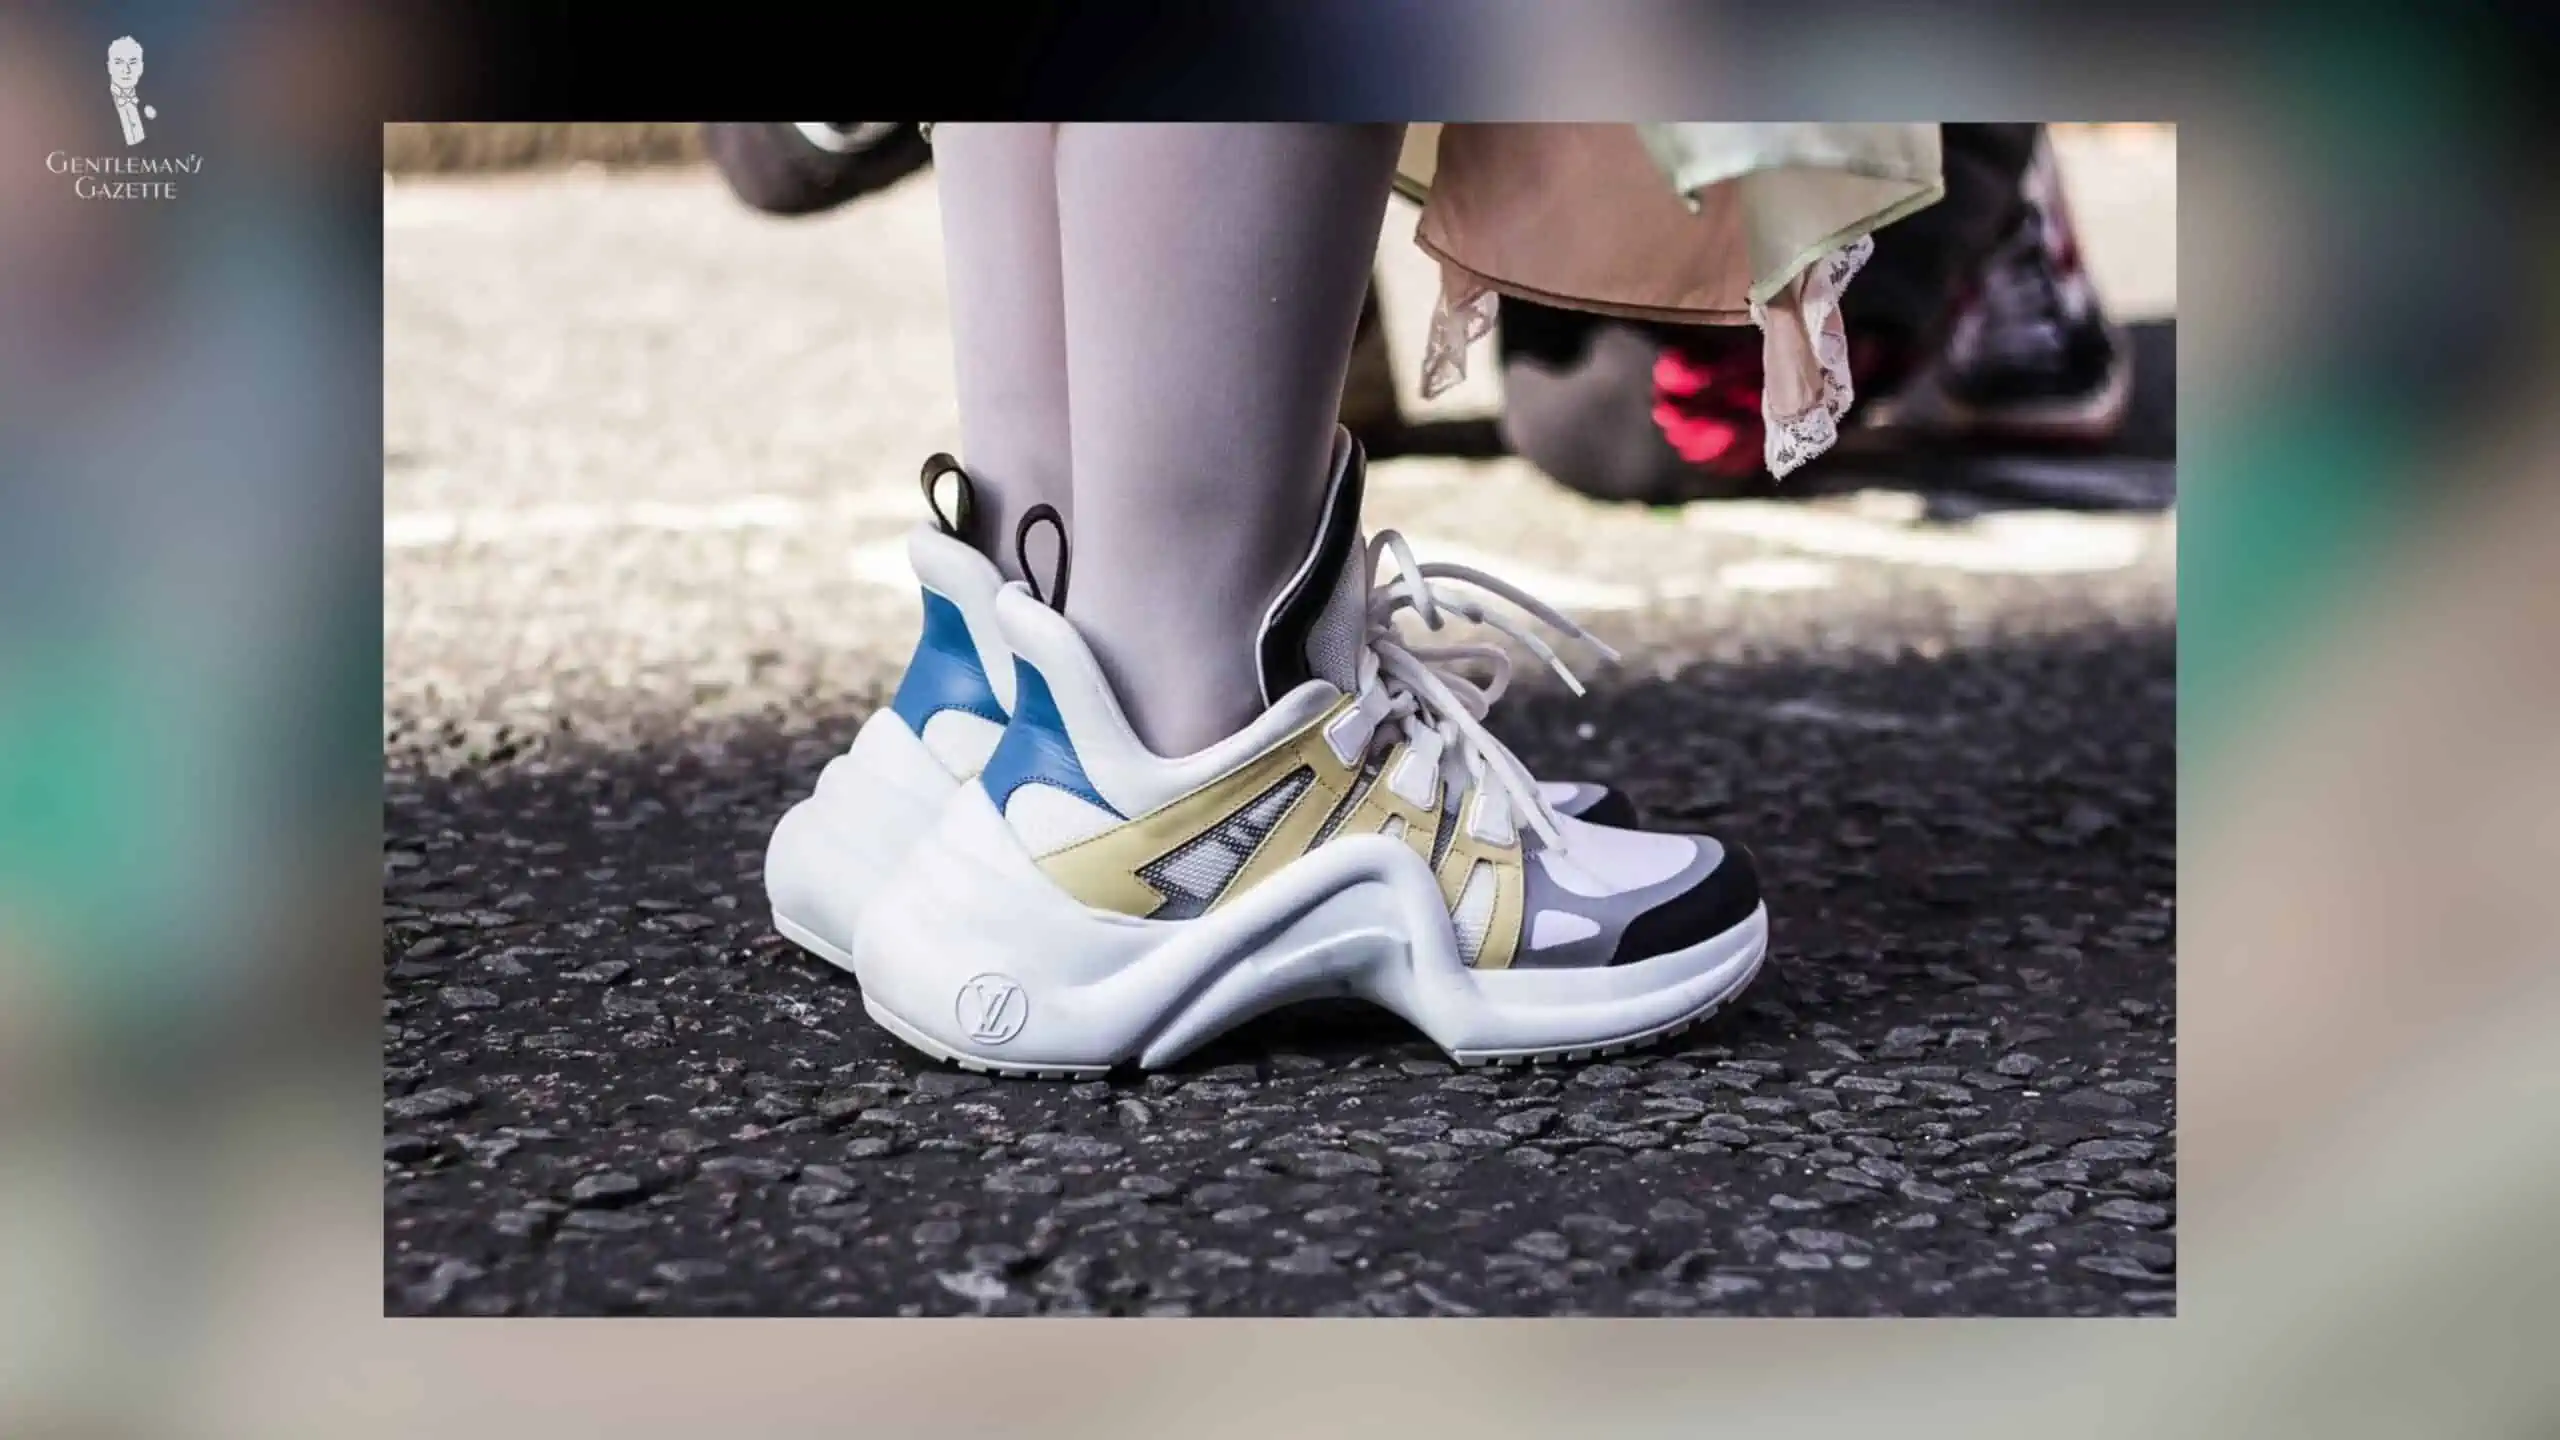 lv archlight sneaker on feet